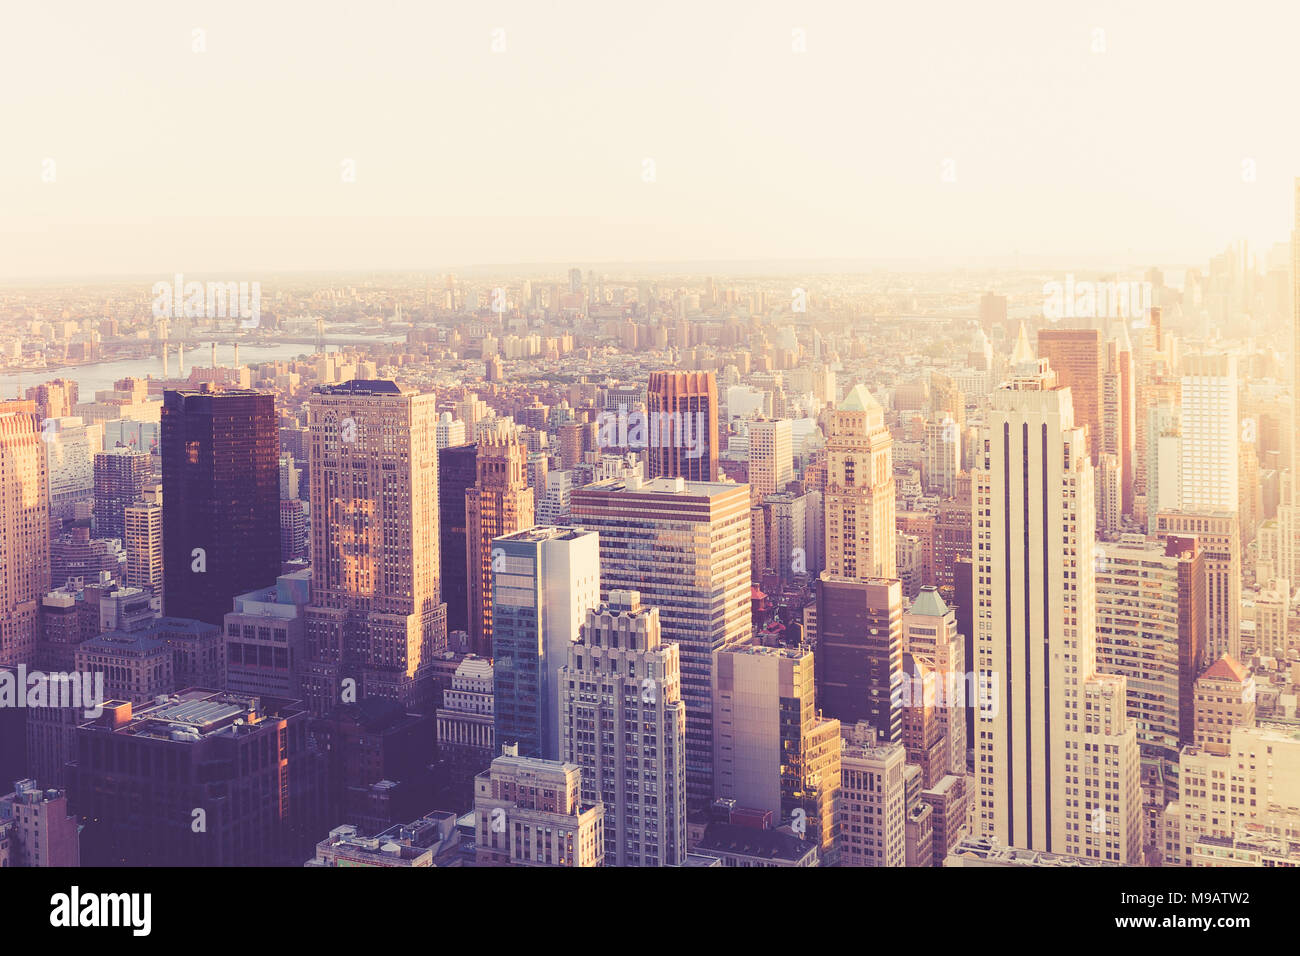 View across midtown Manhattan New York City buildings with vintage tone Stock Photo